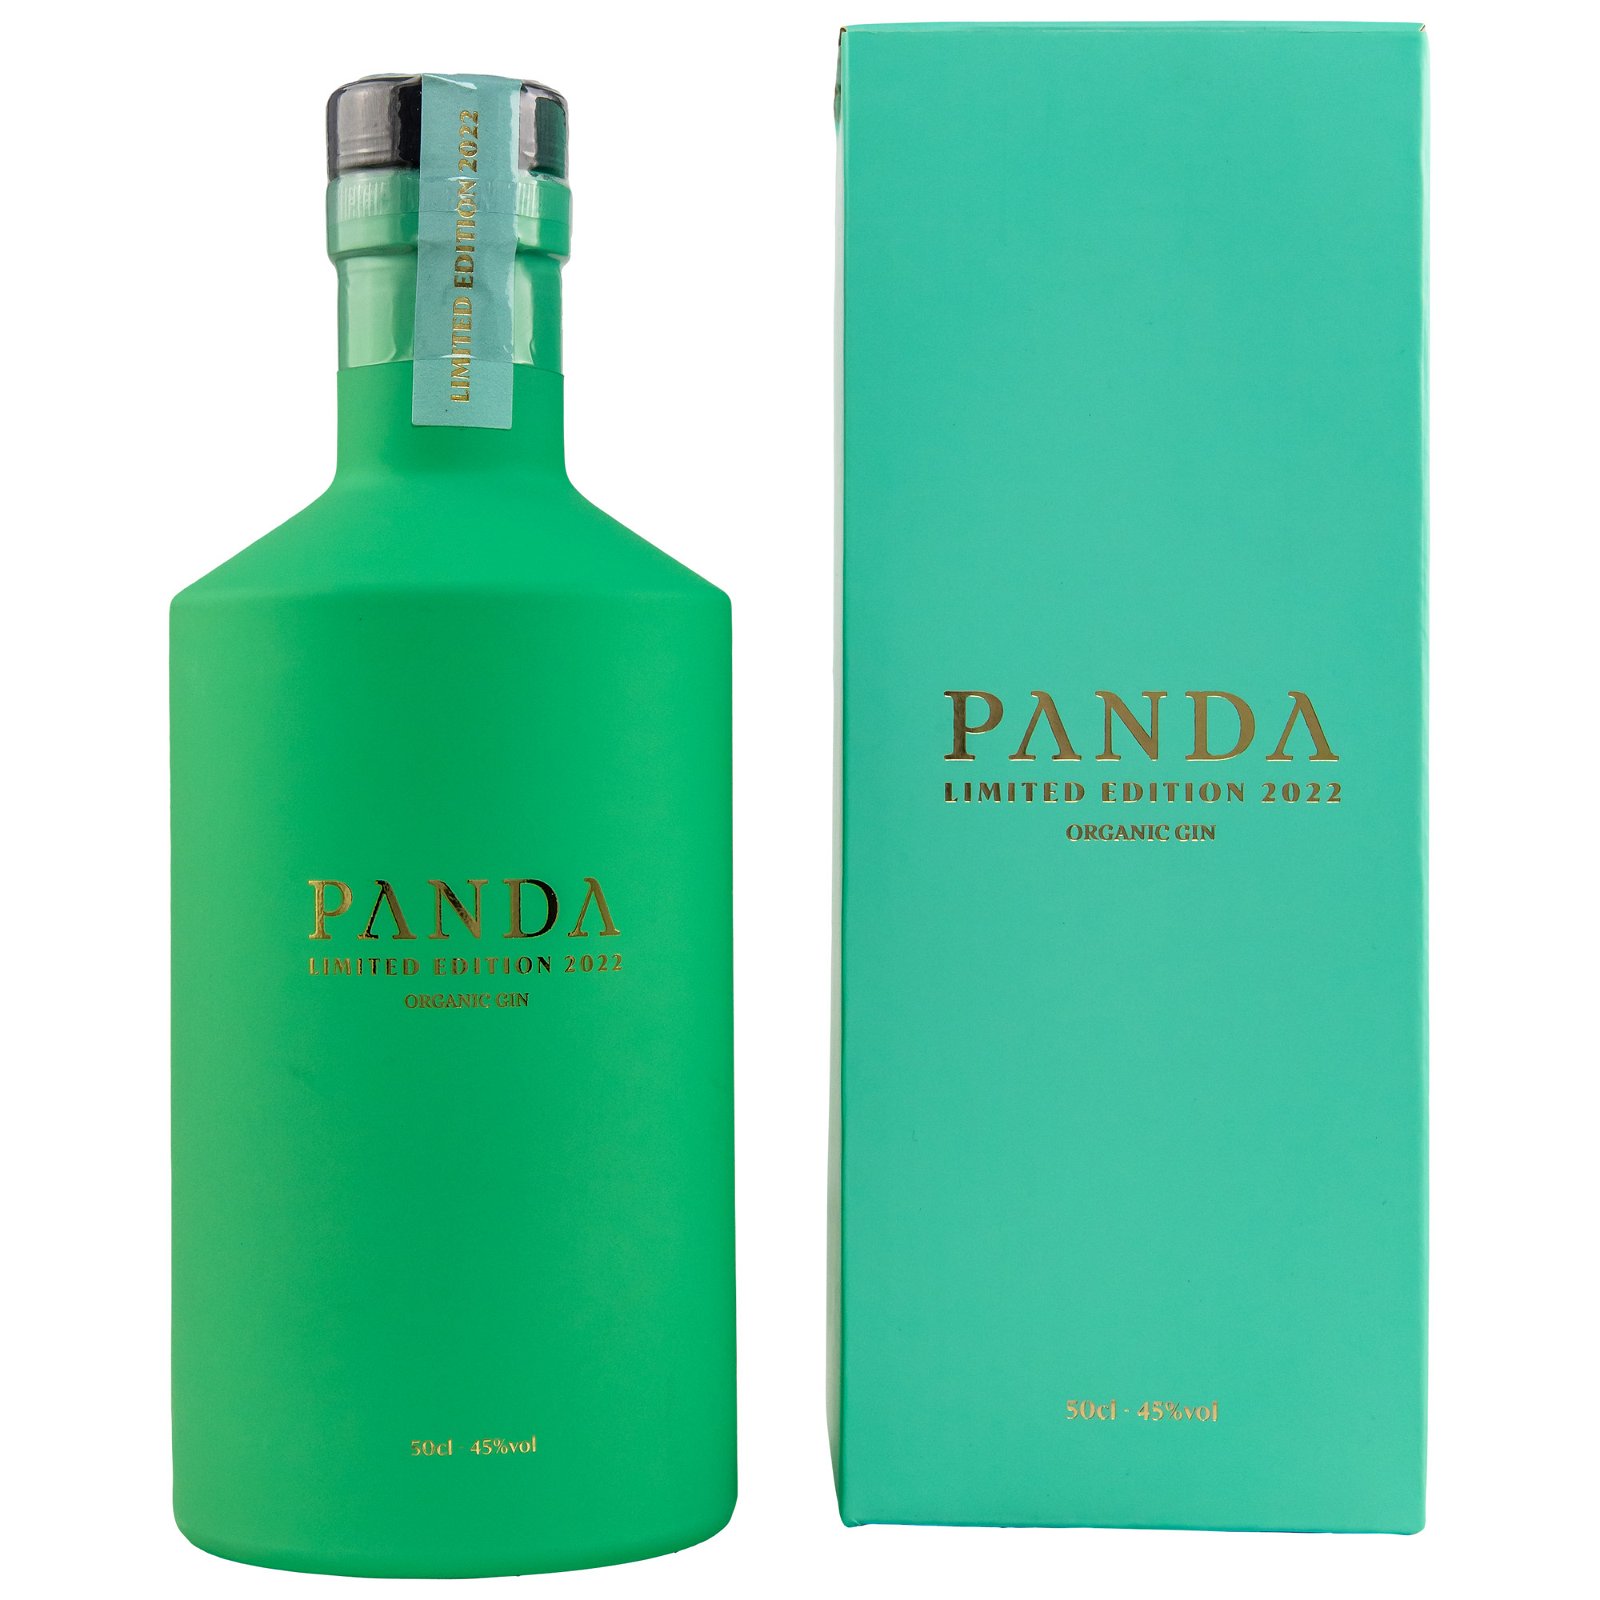 Panda Organic Gin Limited Edition 2022 (Bio)